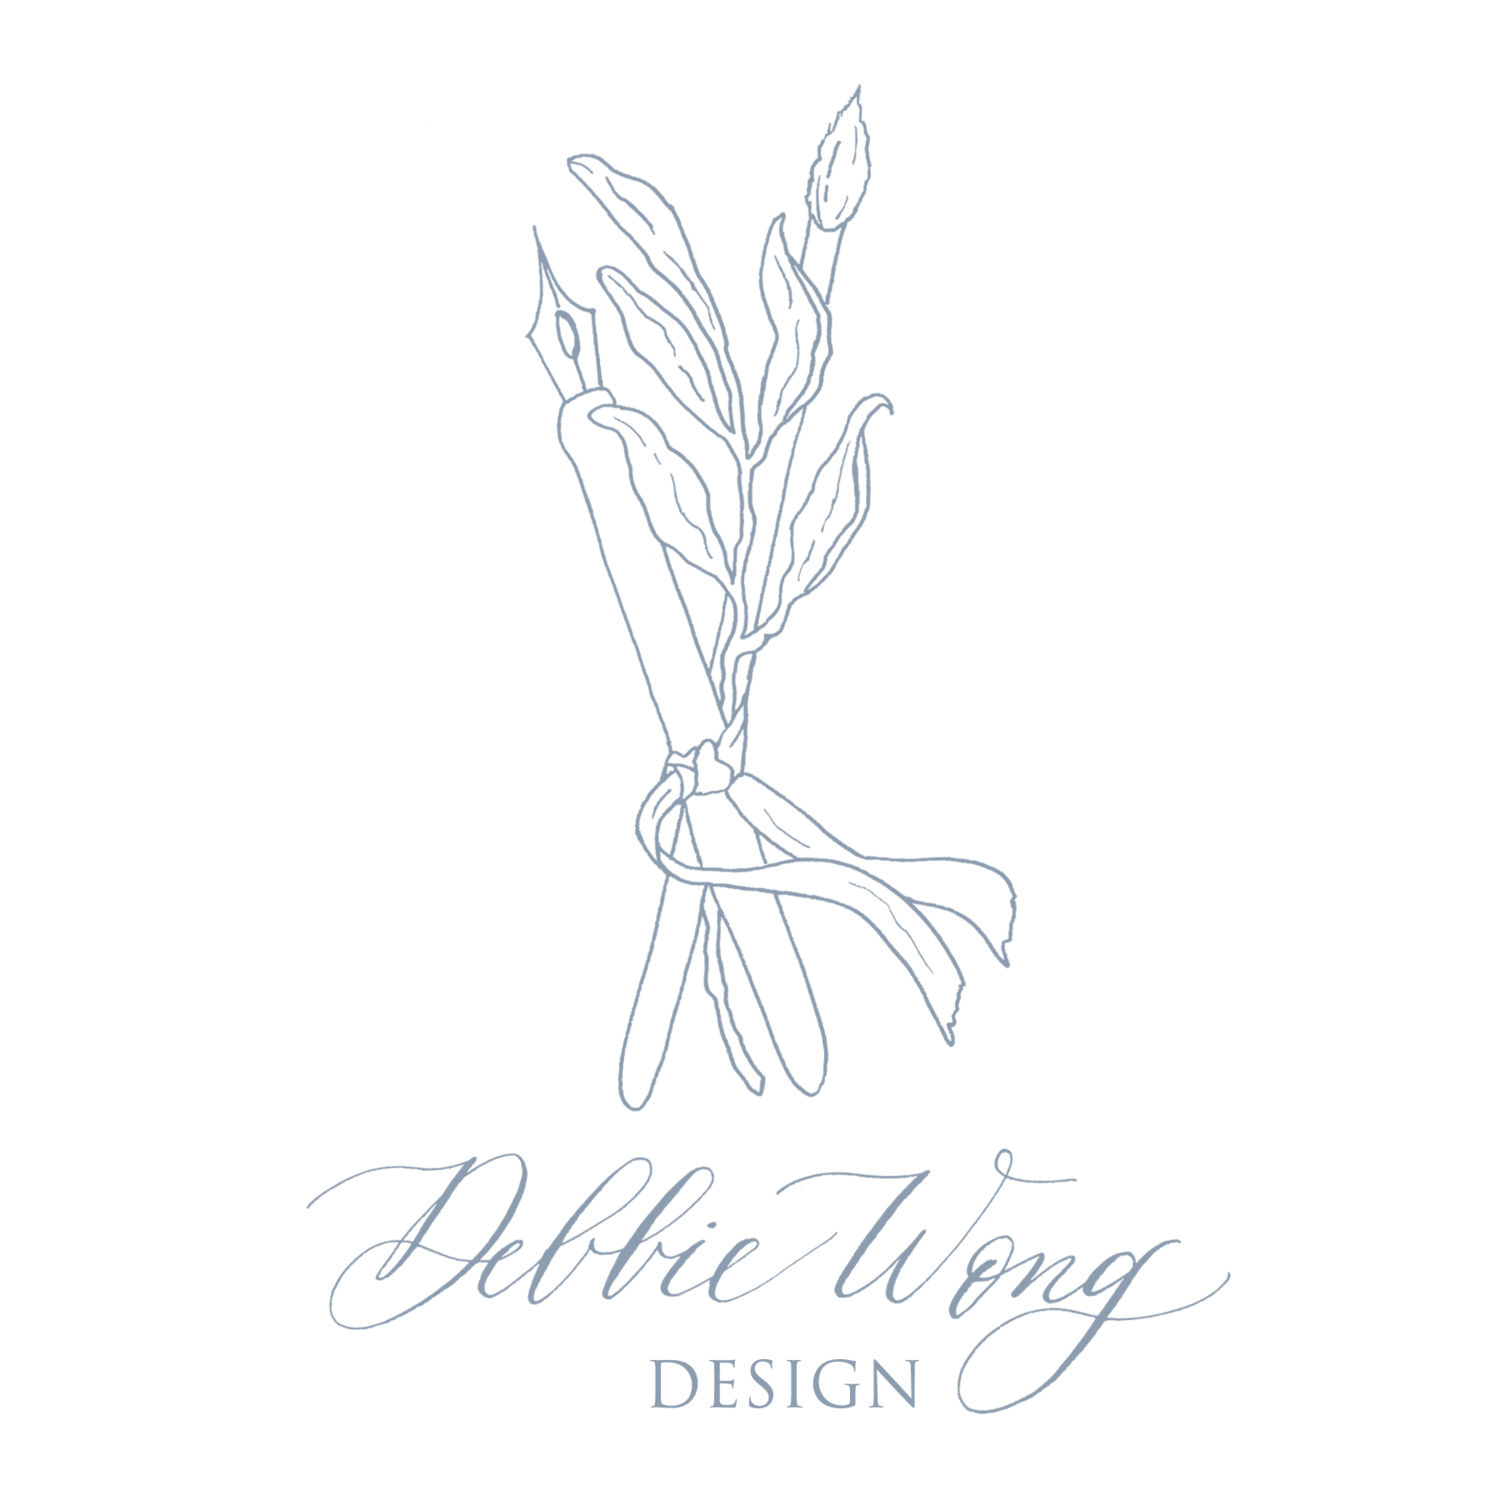 Debbie Wong Design